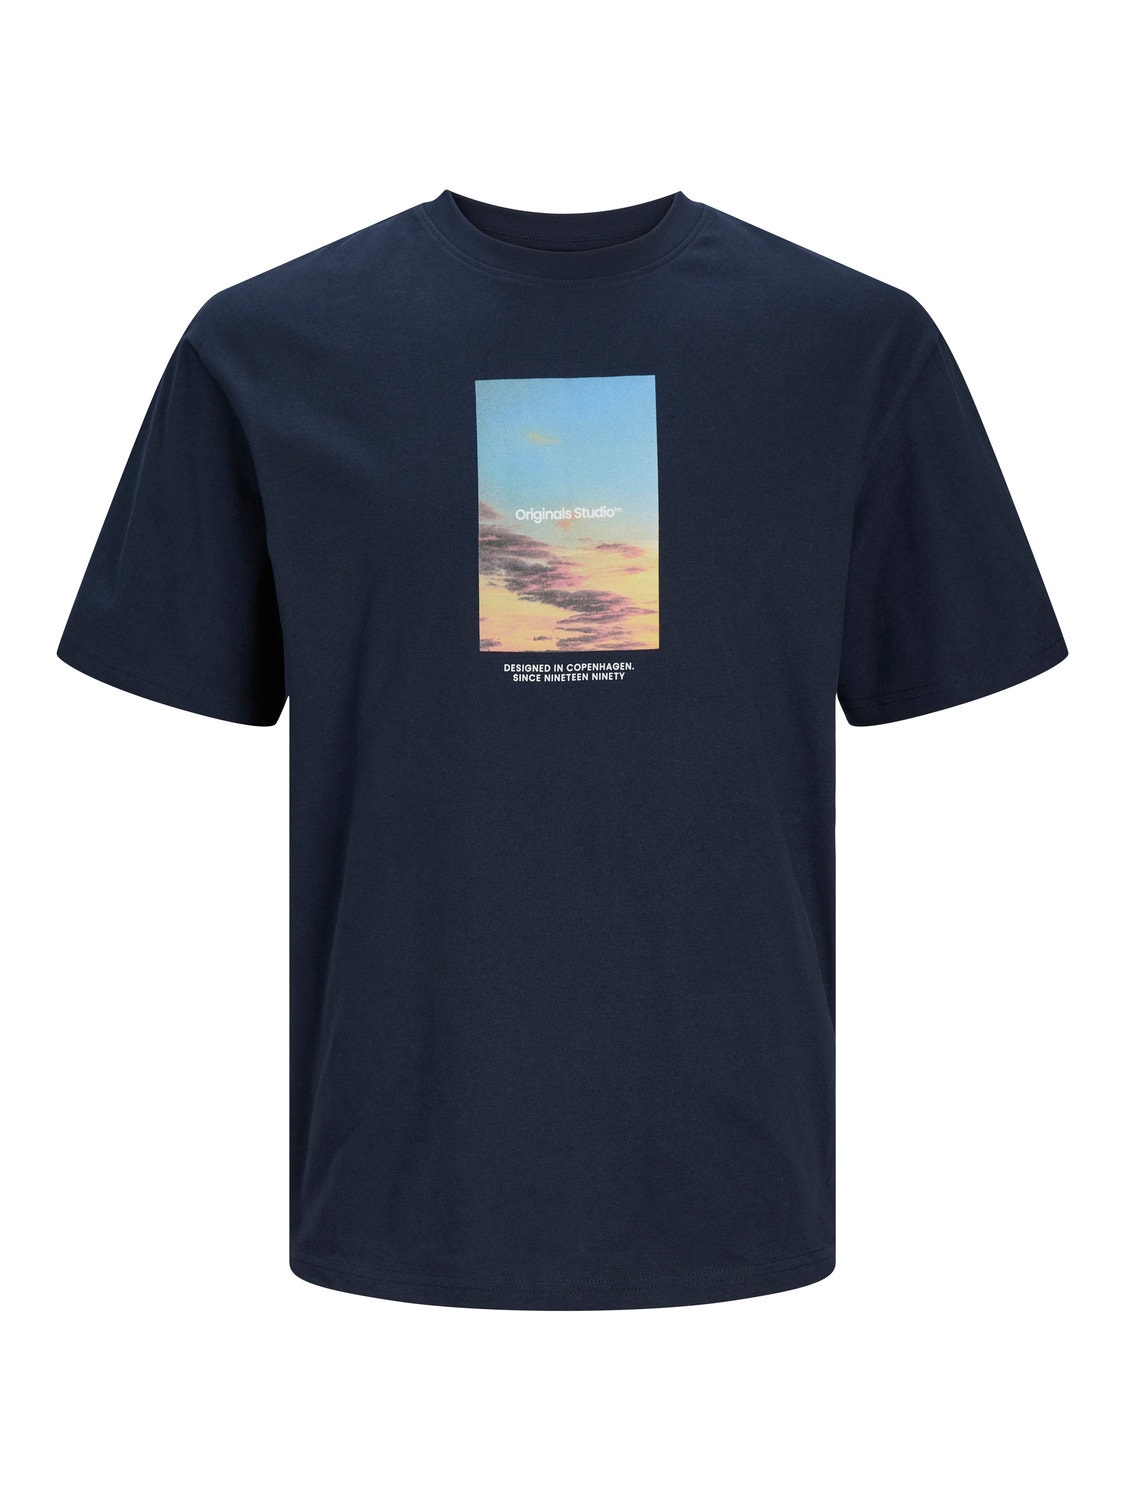 Jack & Jones Printed Crew neck T-shirt -Sky Captain - 12250421